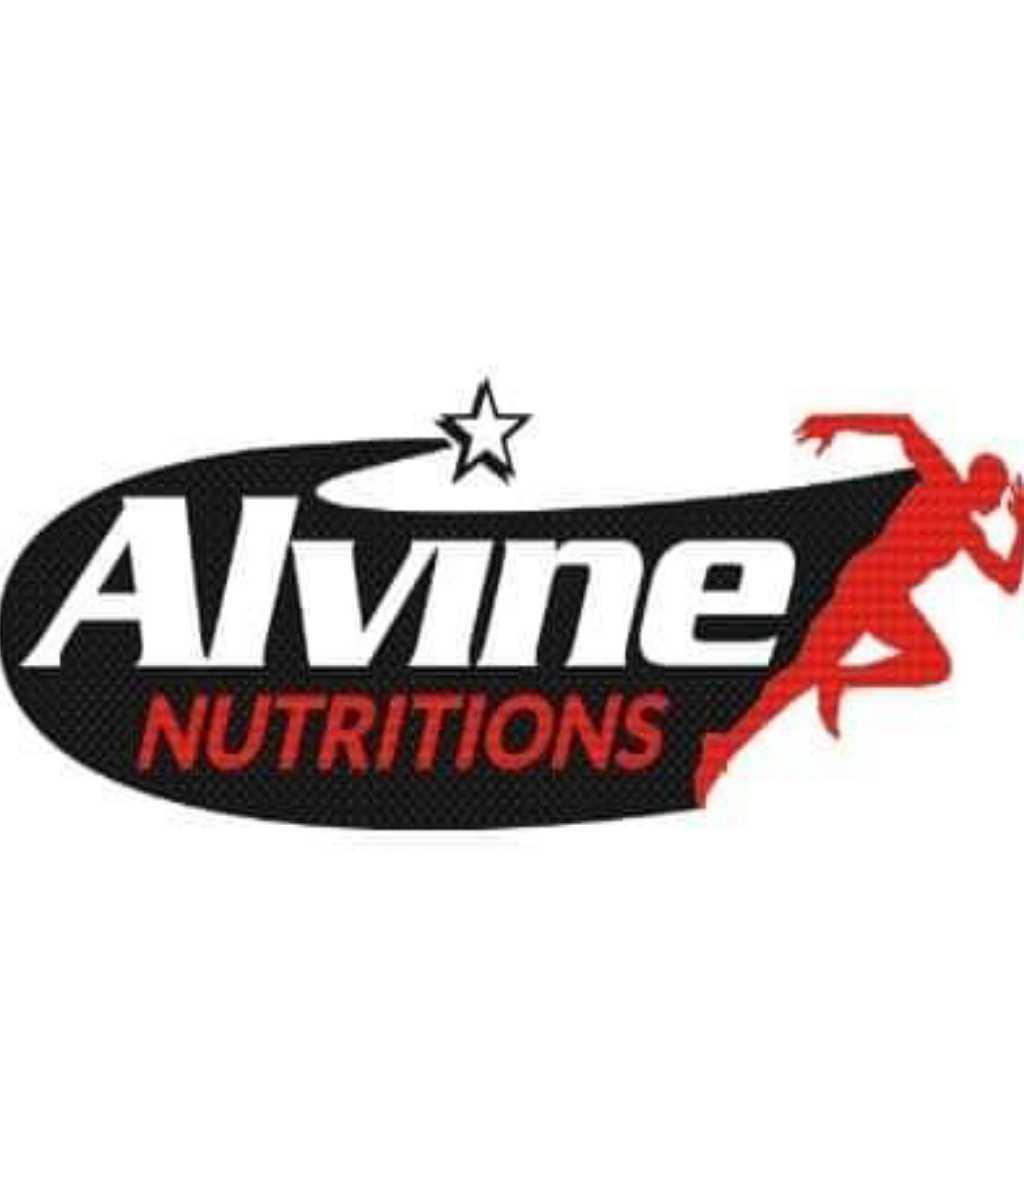 ALVINE NUTRITIONS